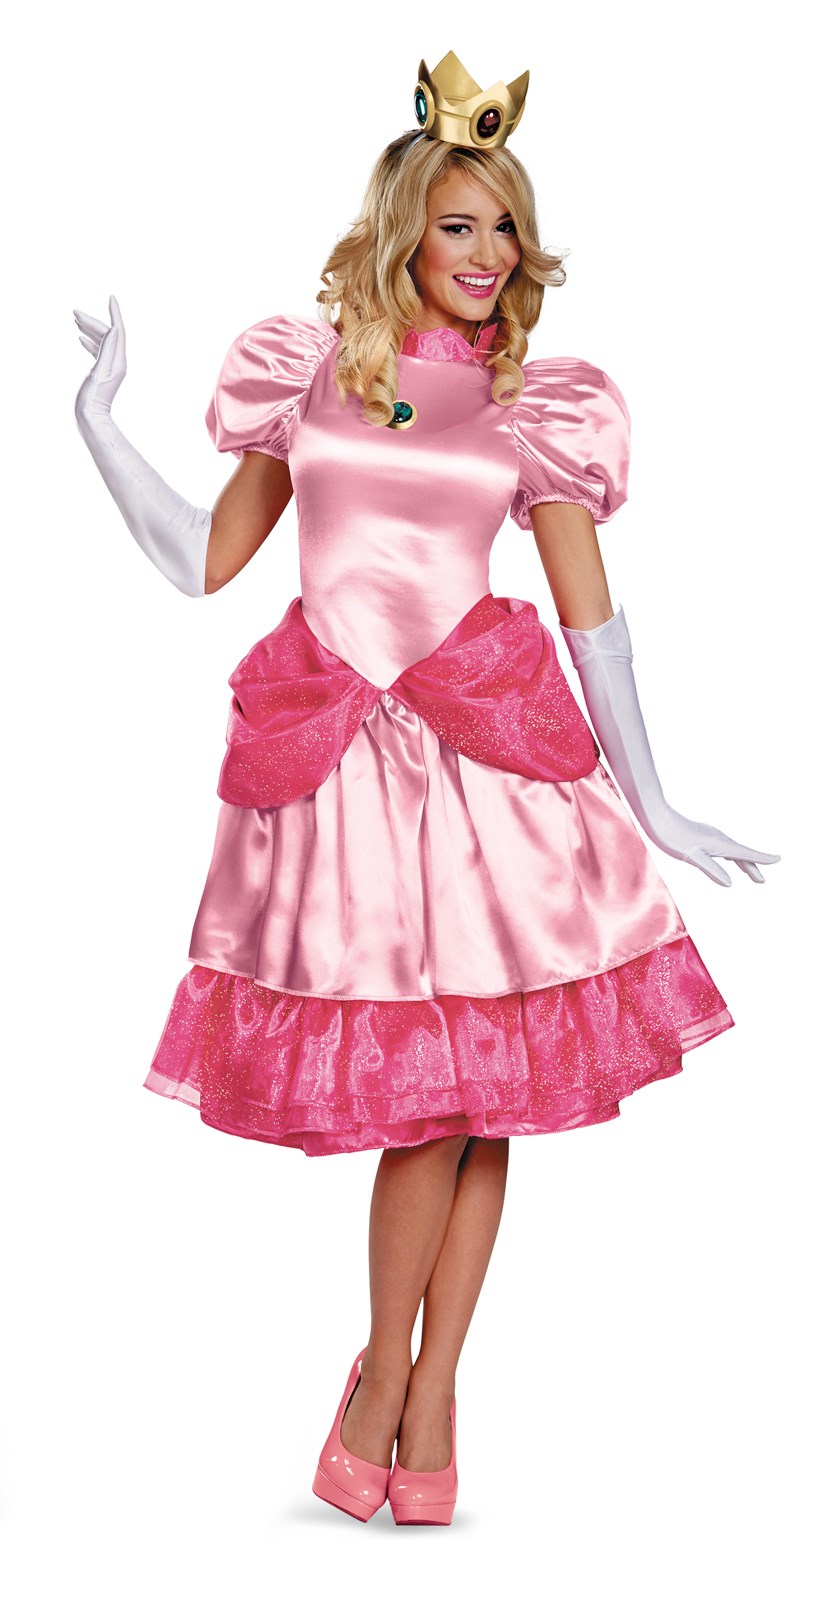 Super Mario Brothers - Deluxe Princess Peach Costume